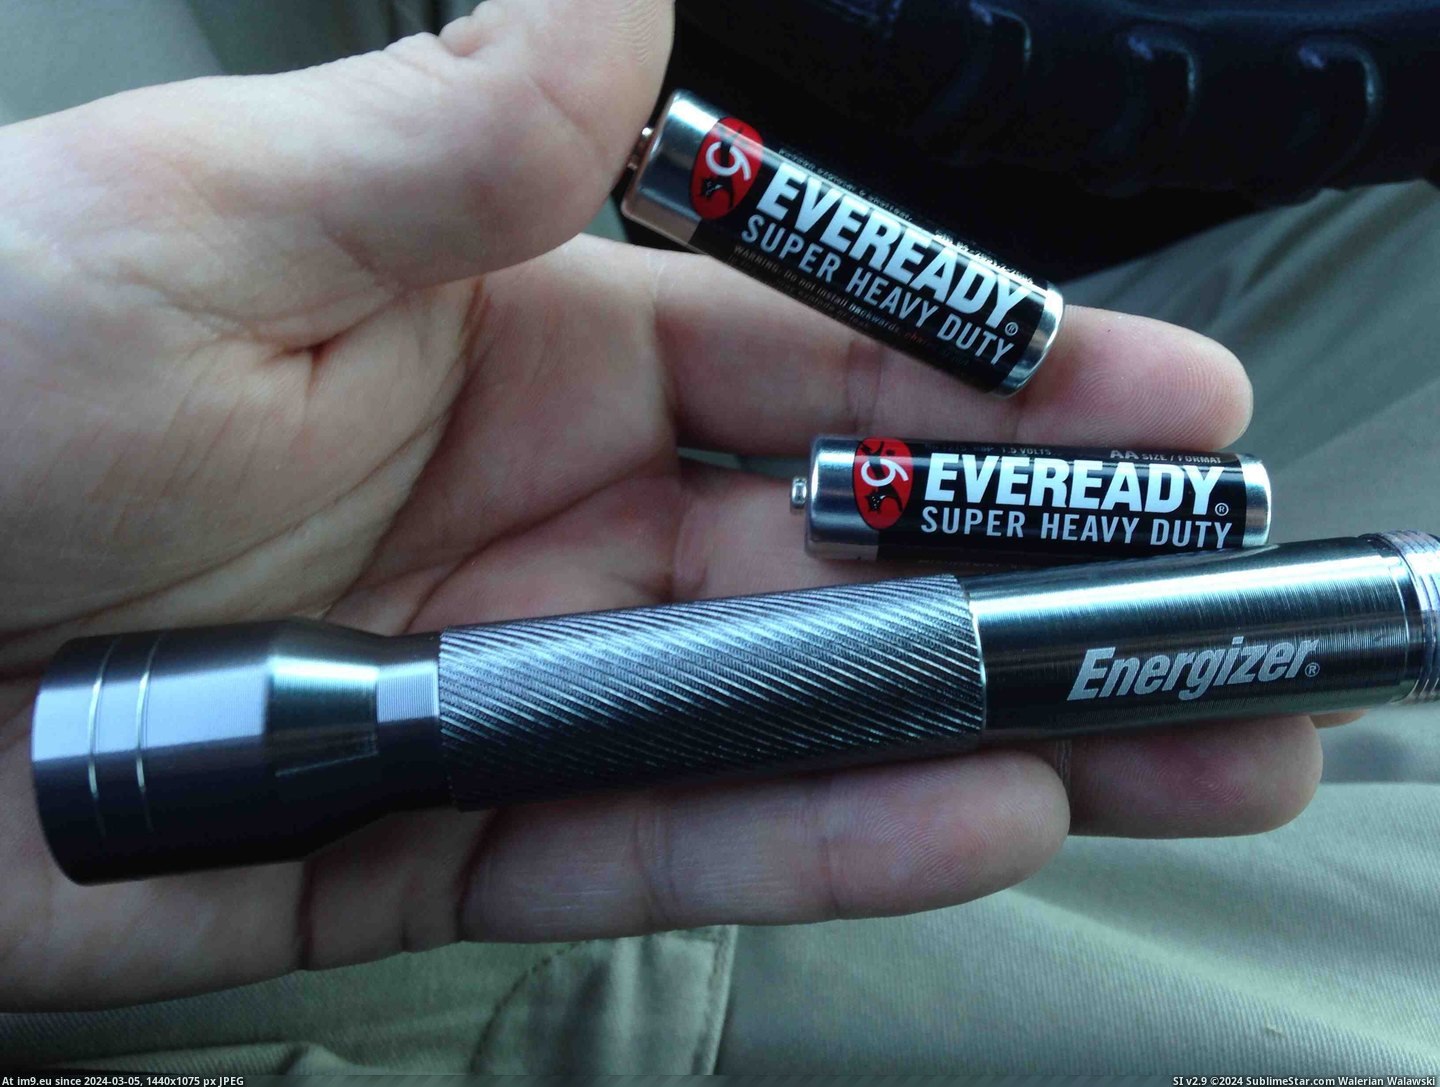 #Bought #Batteries #Eveready #Flashlight #Energizer [Pics] bought an energizer flashlight, it came with eveready batteries Pic. (Изображение из альбом My r/PICS favs))